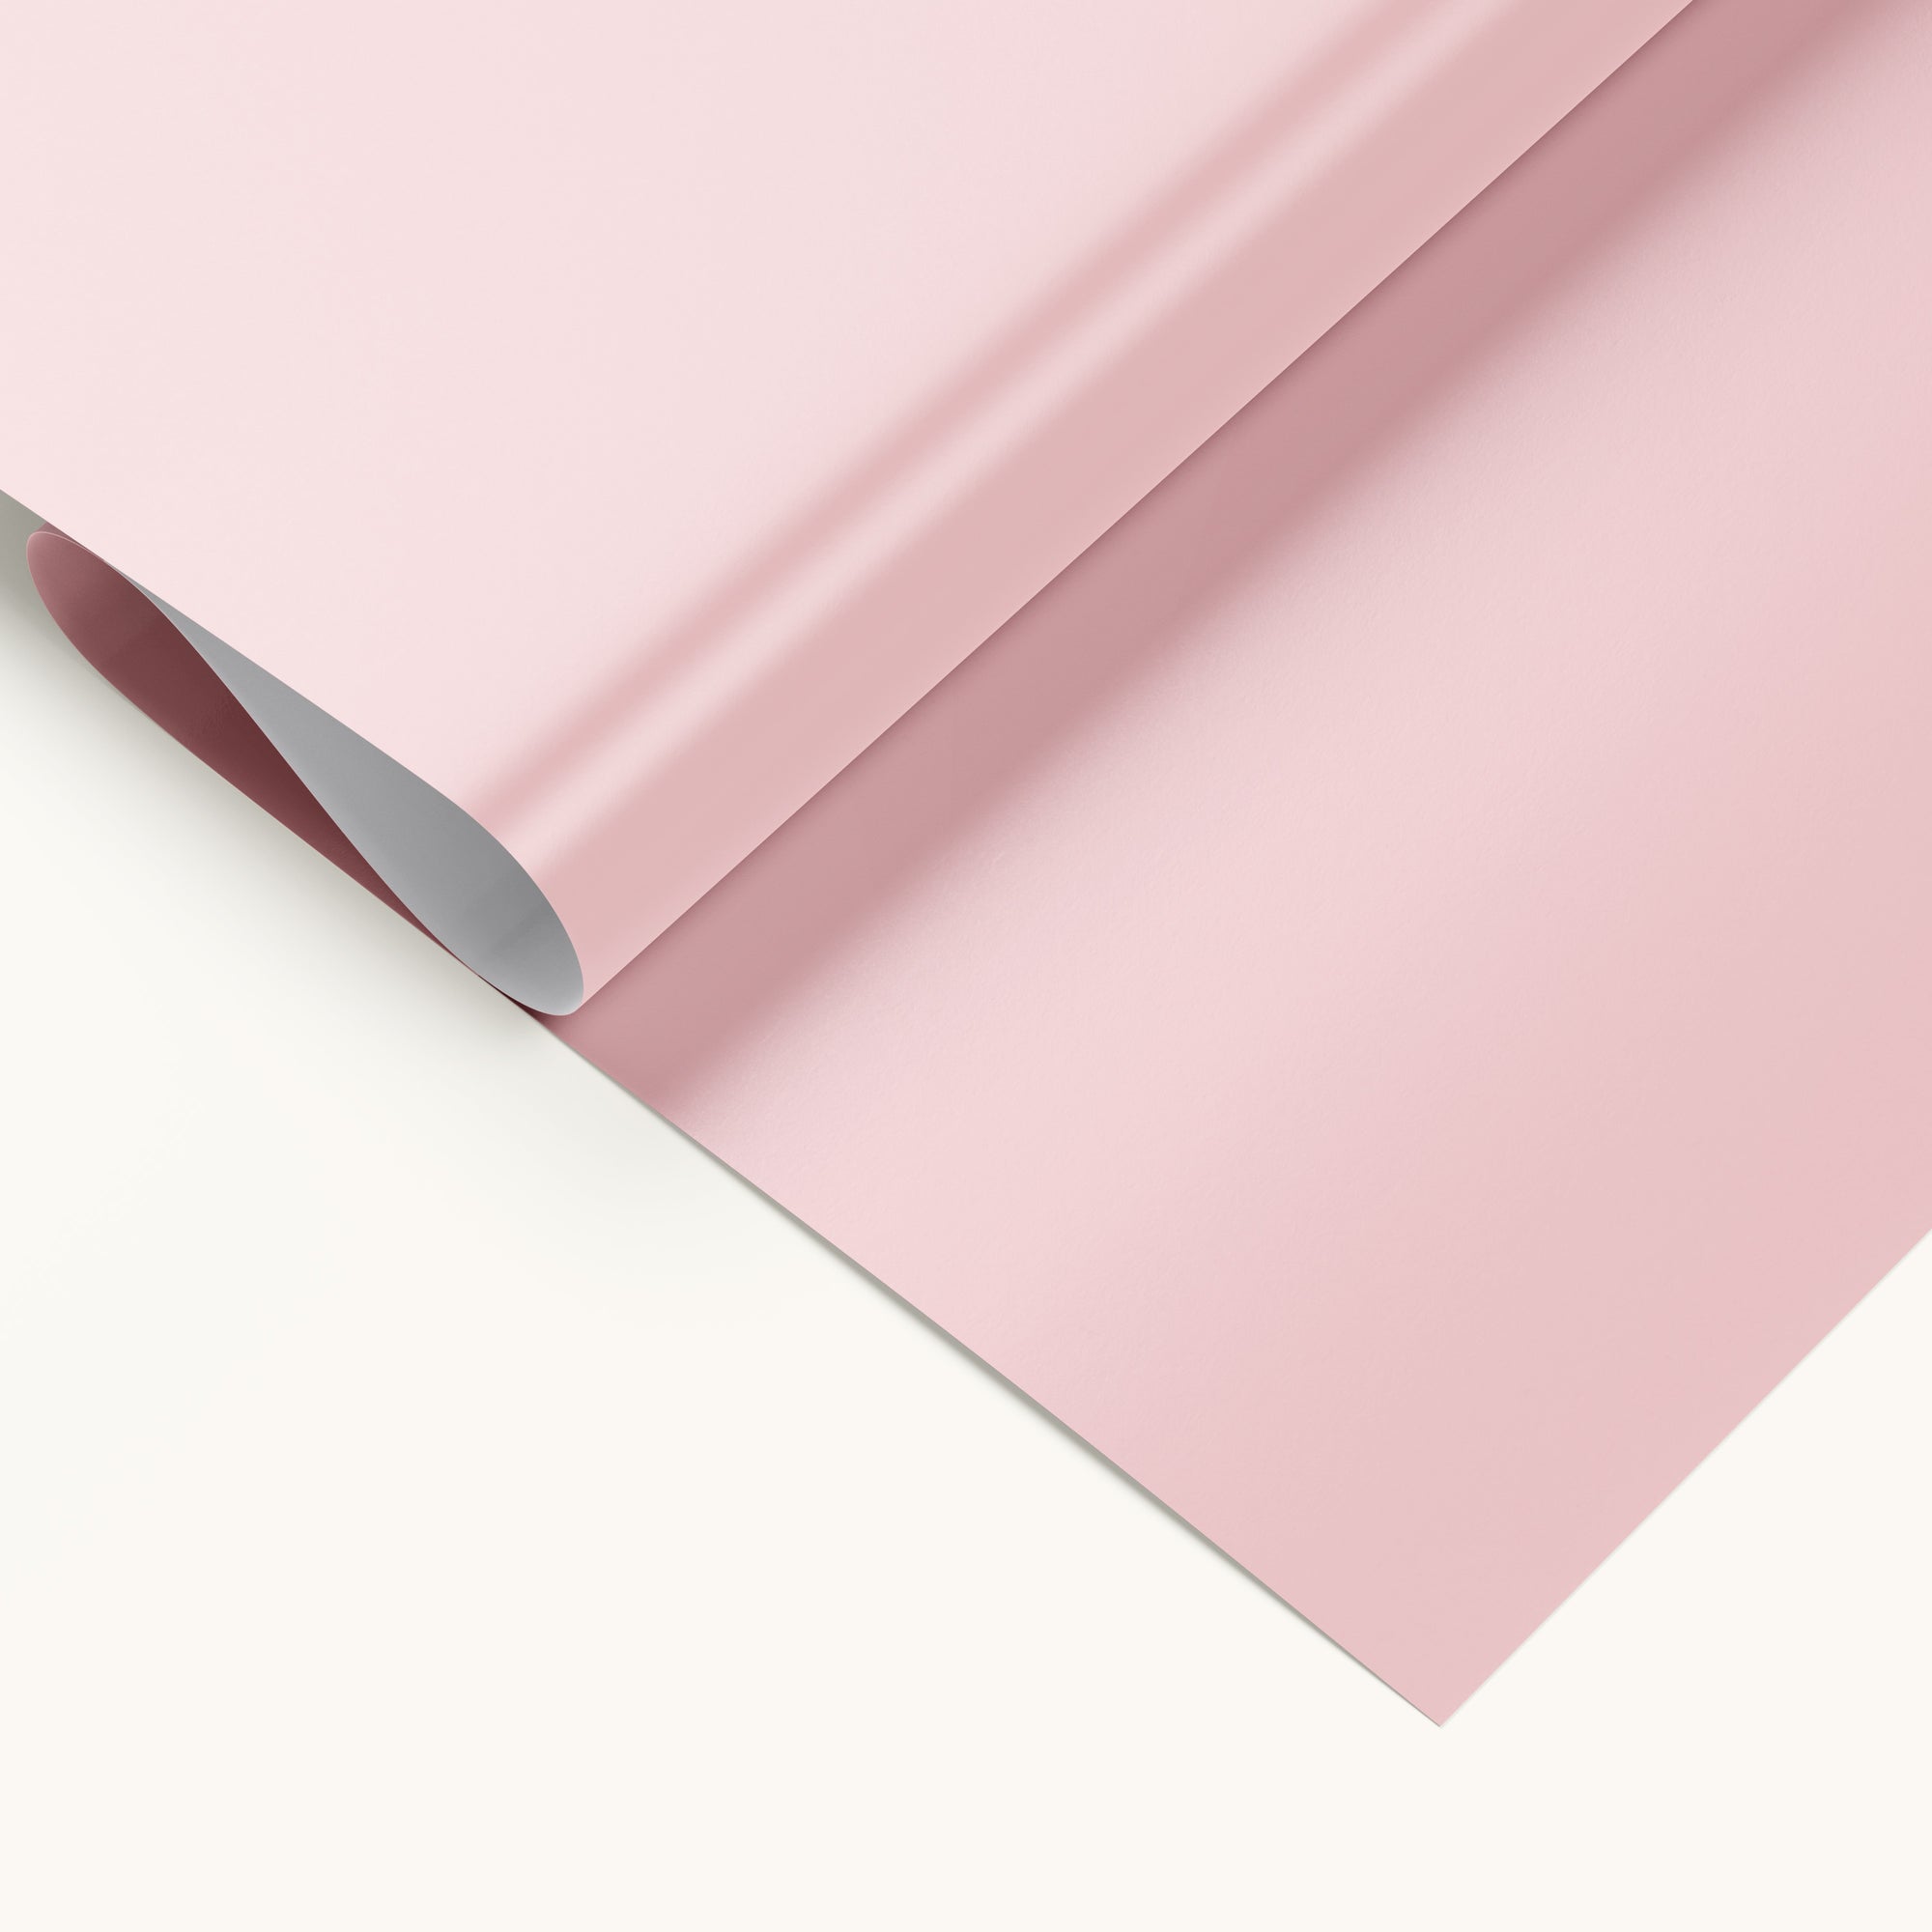 light pink product photography backdrop background vinyl